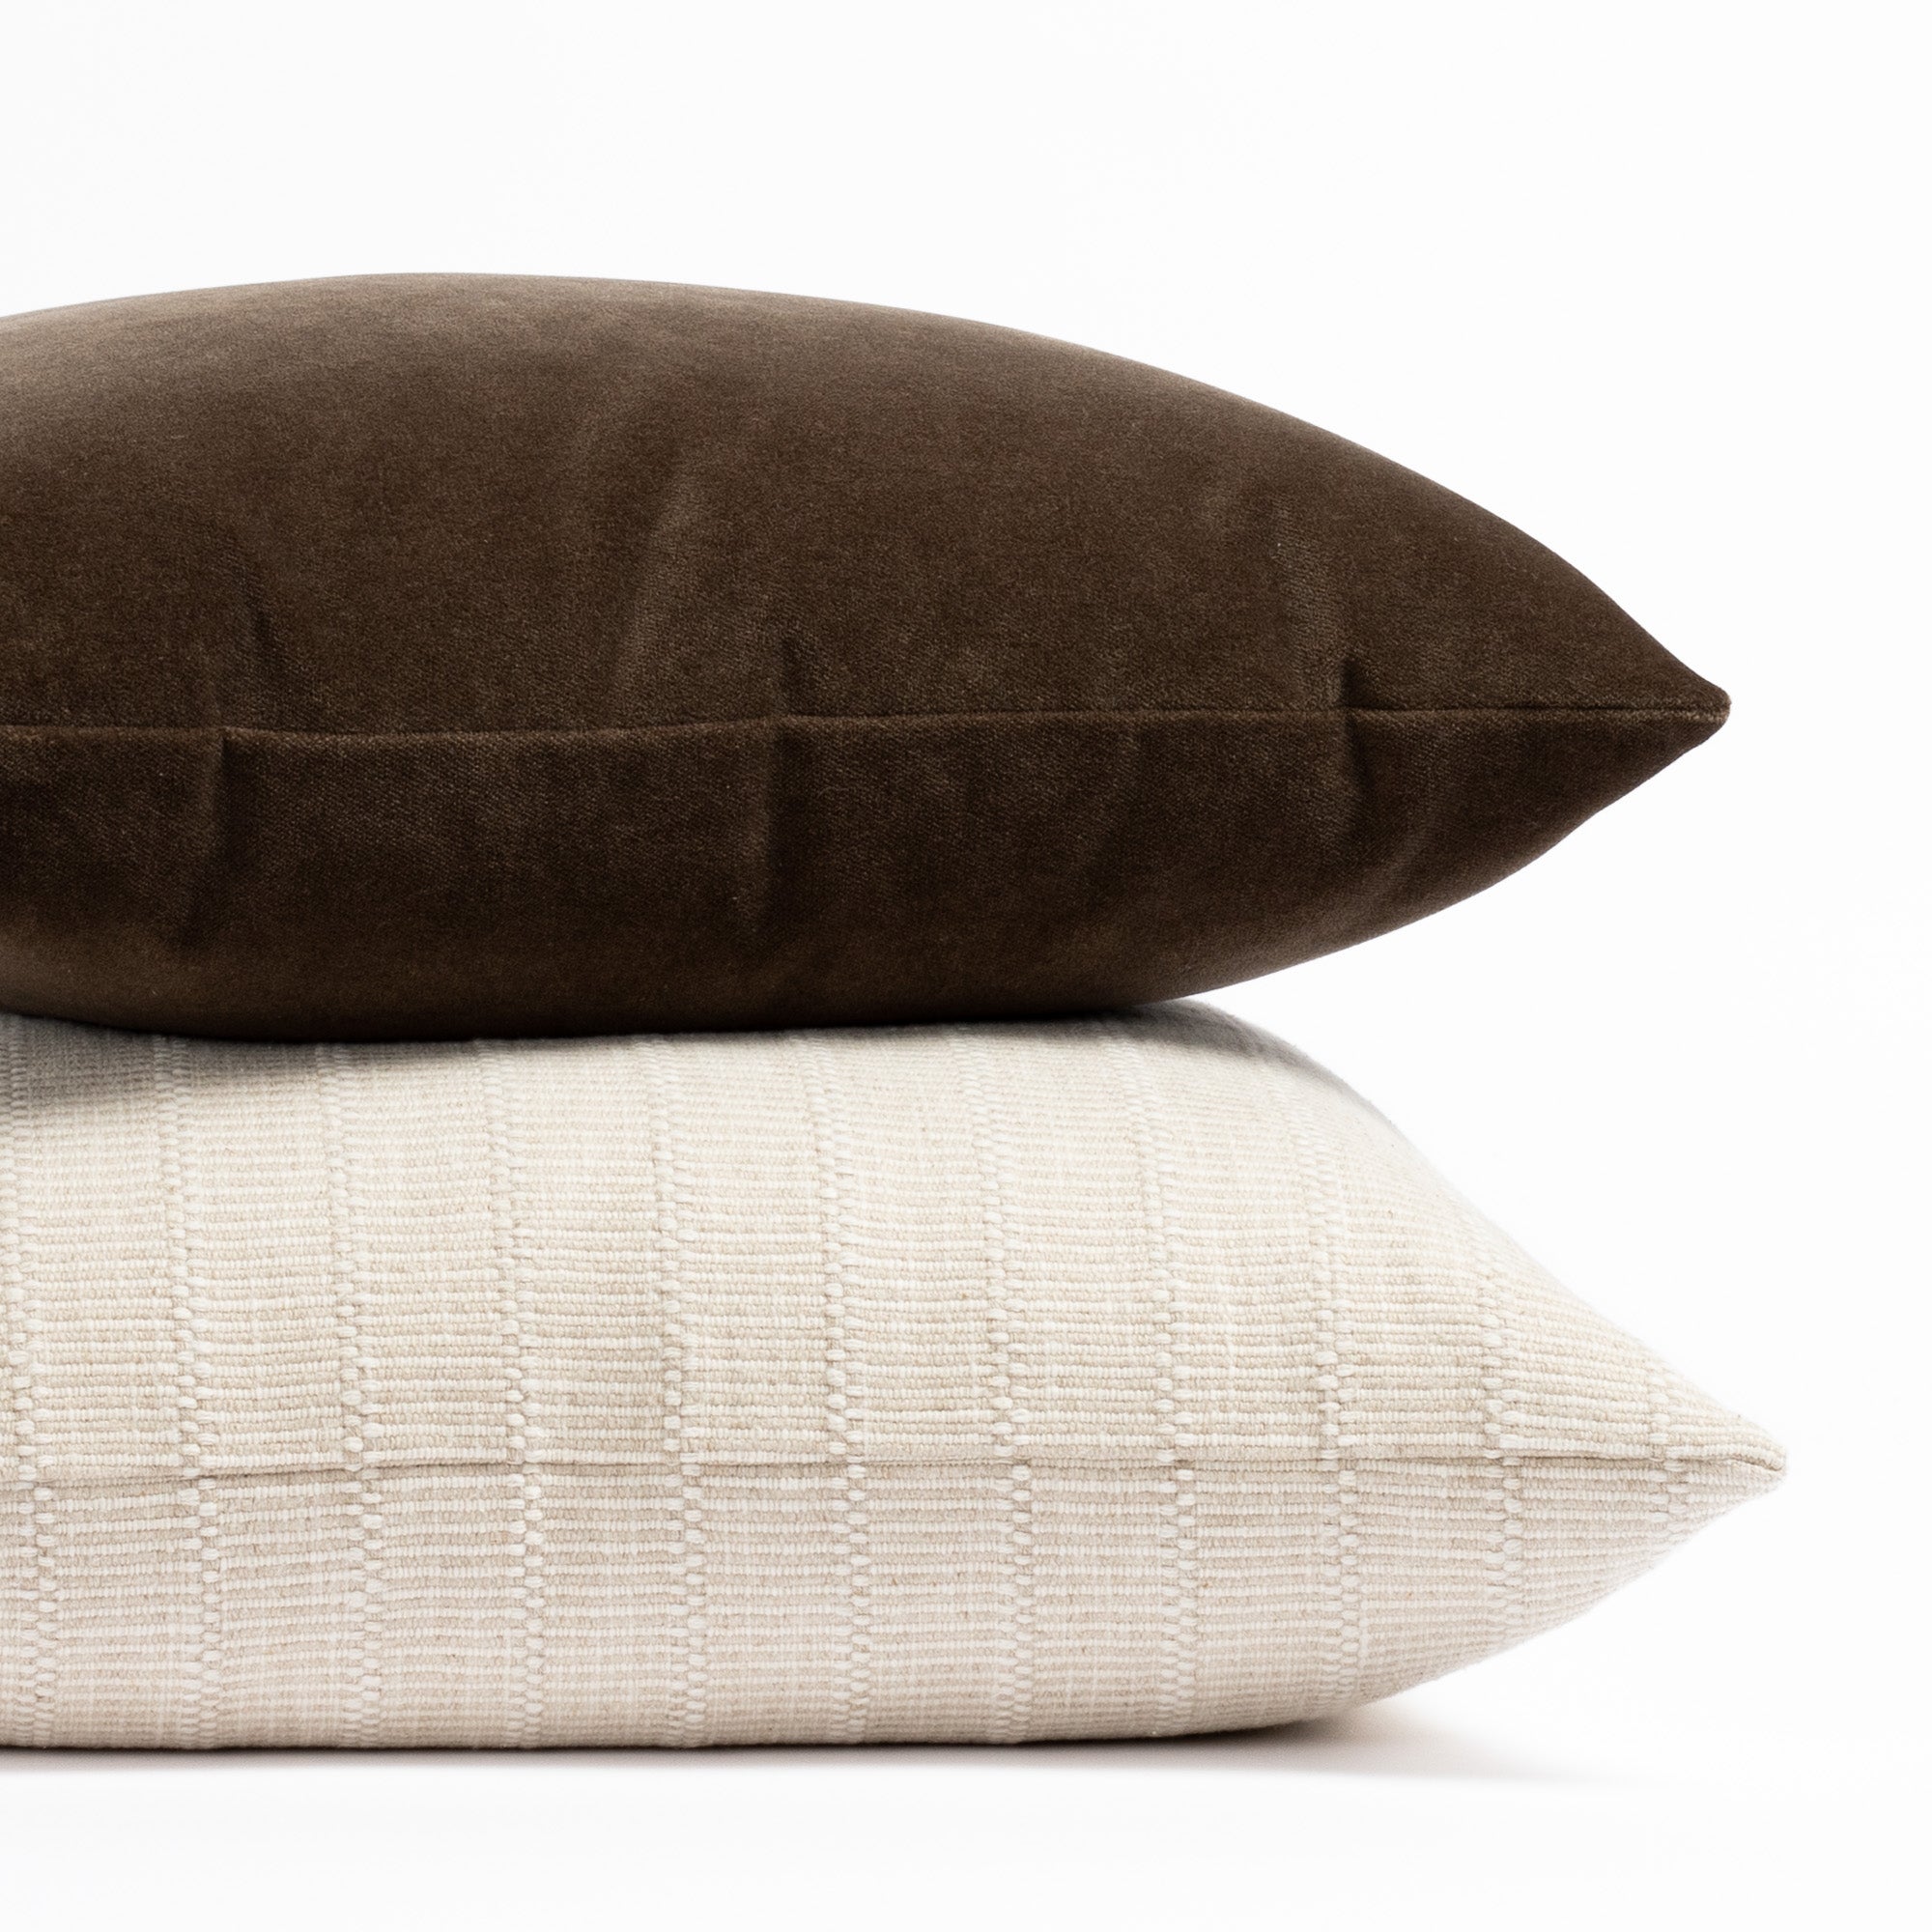 Modern Throw pillows from Tonic Living